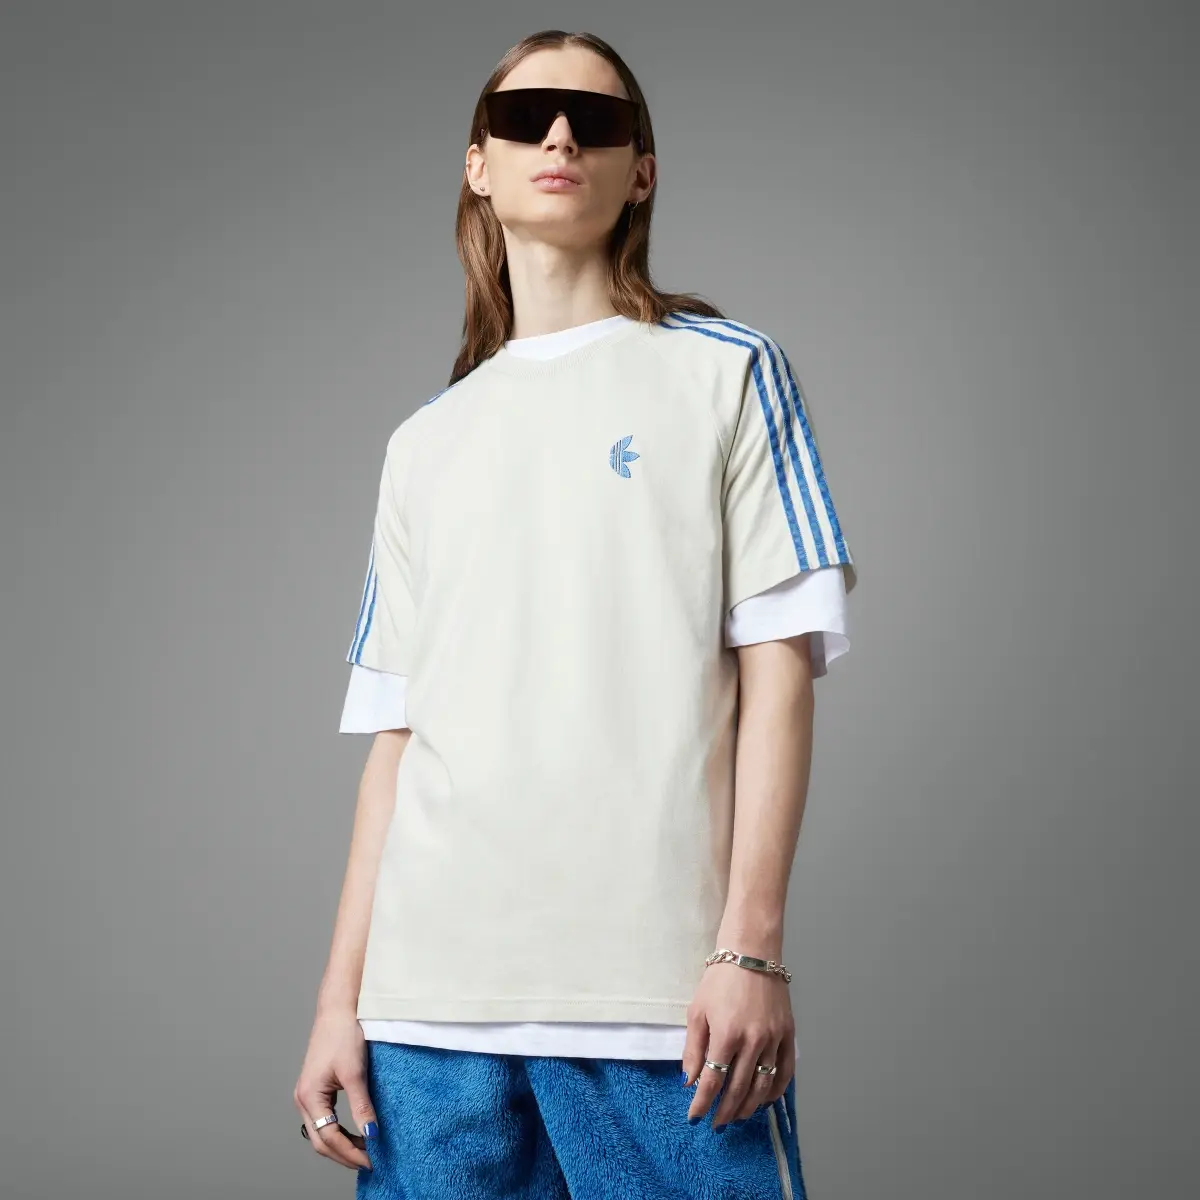 Adidas Indigo Herz Fur T-Shirt. 1